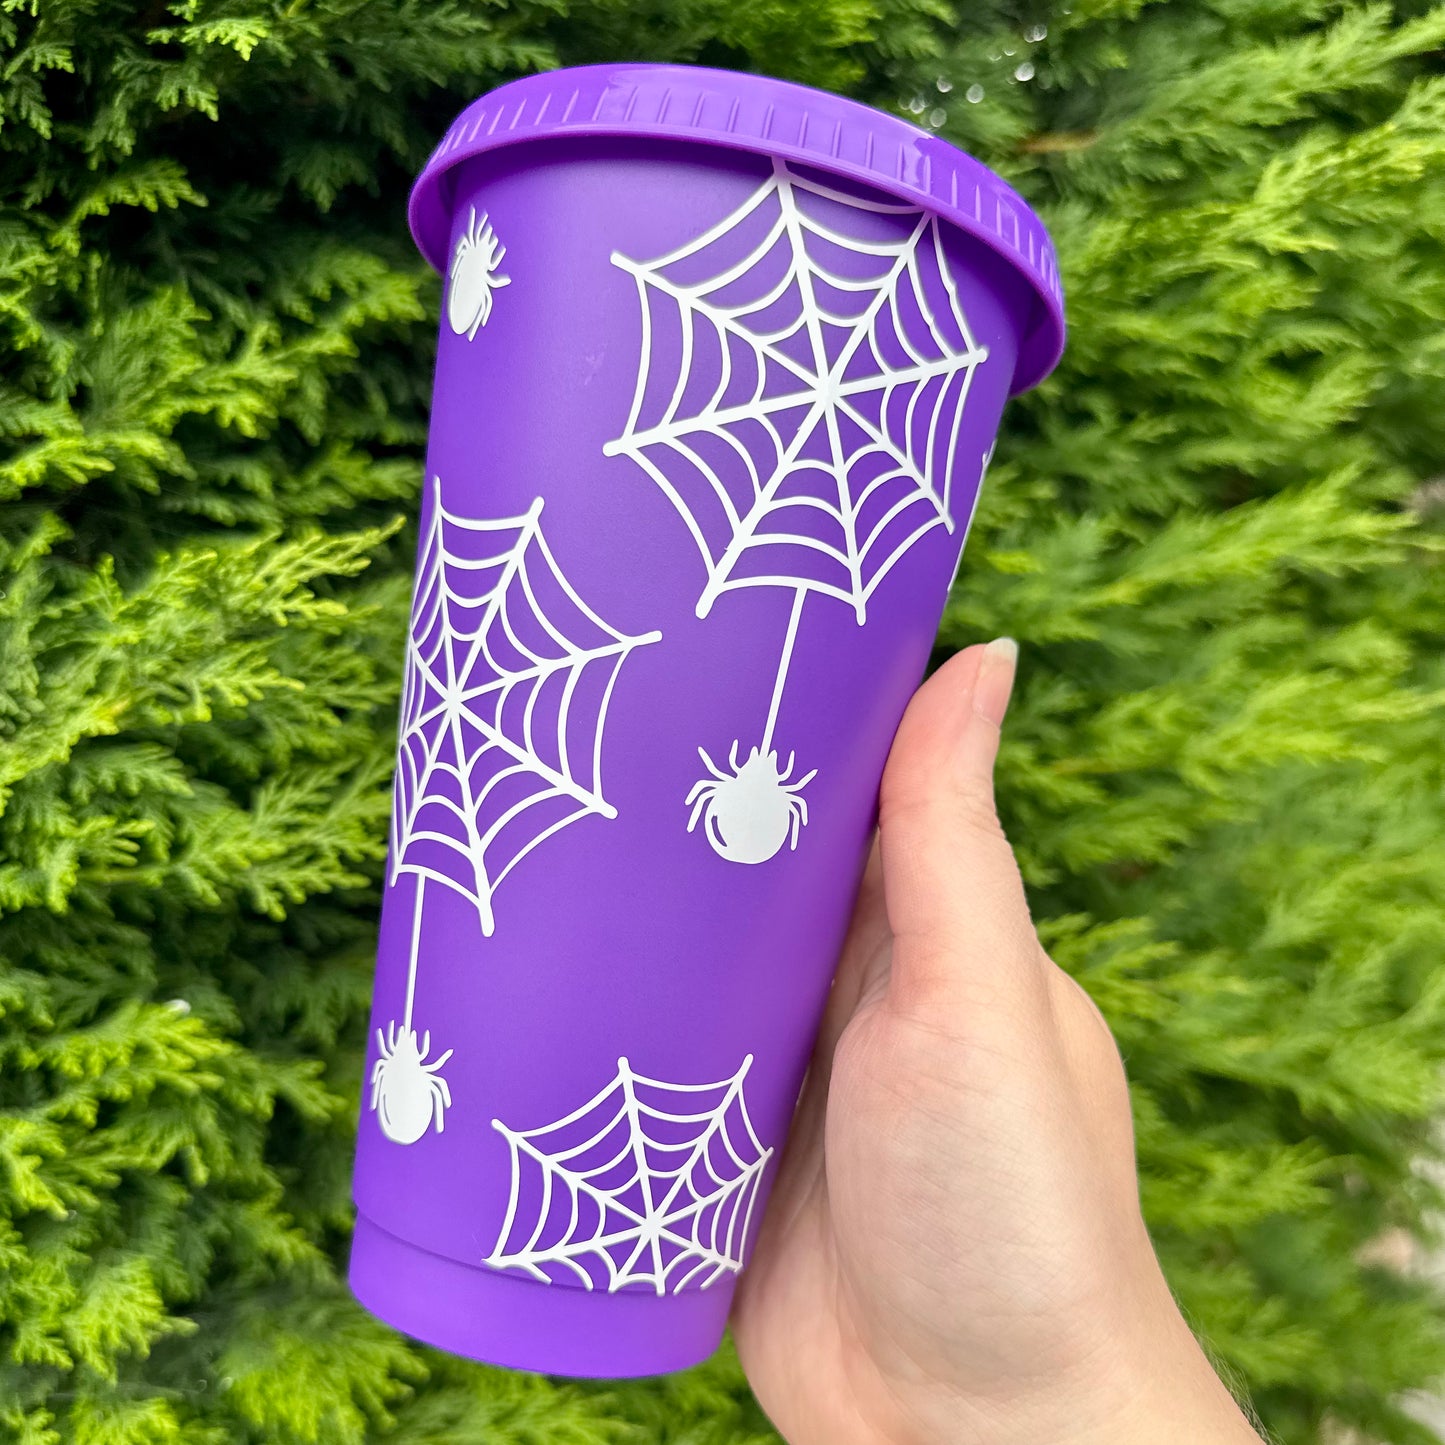 Spiderweb cup